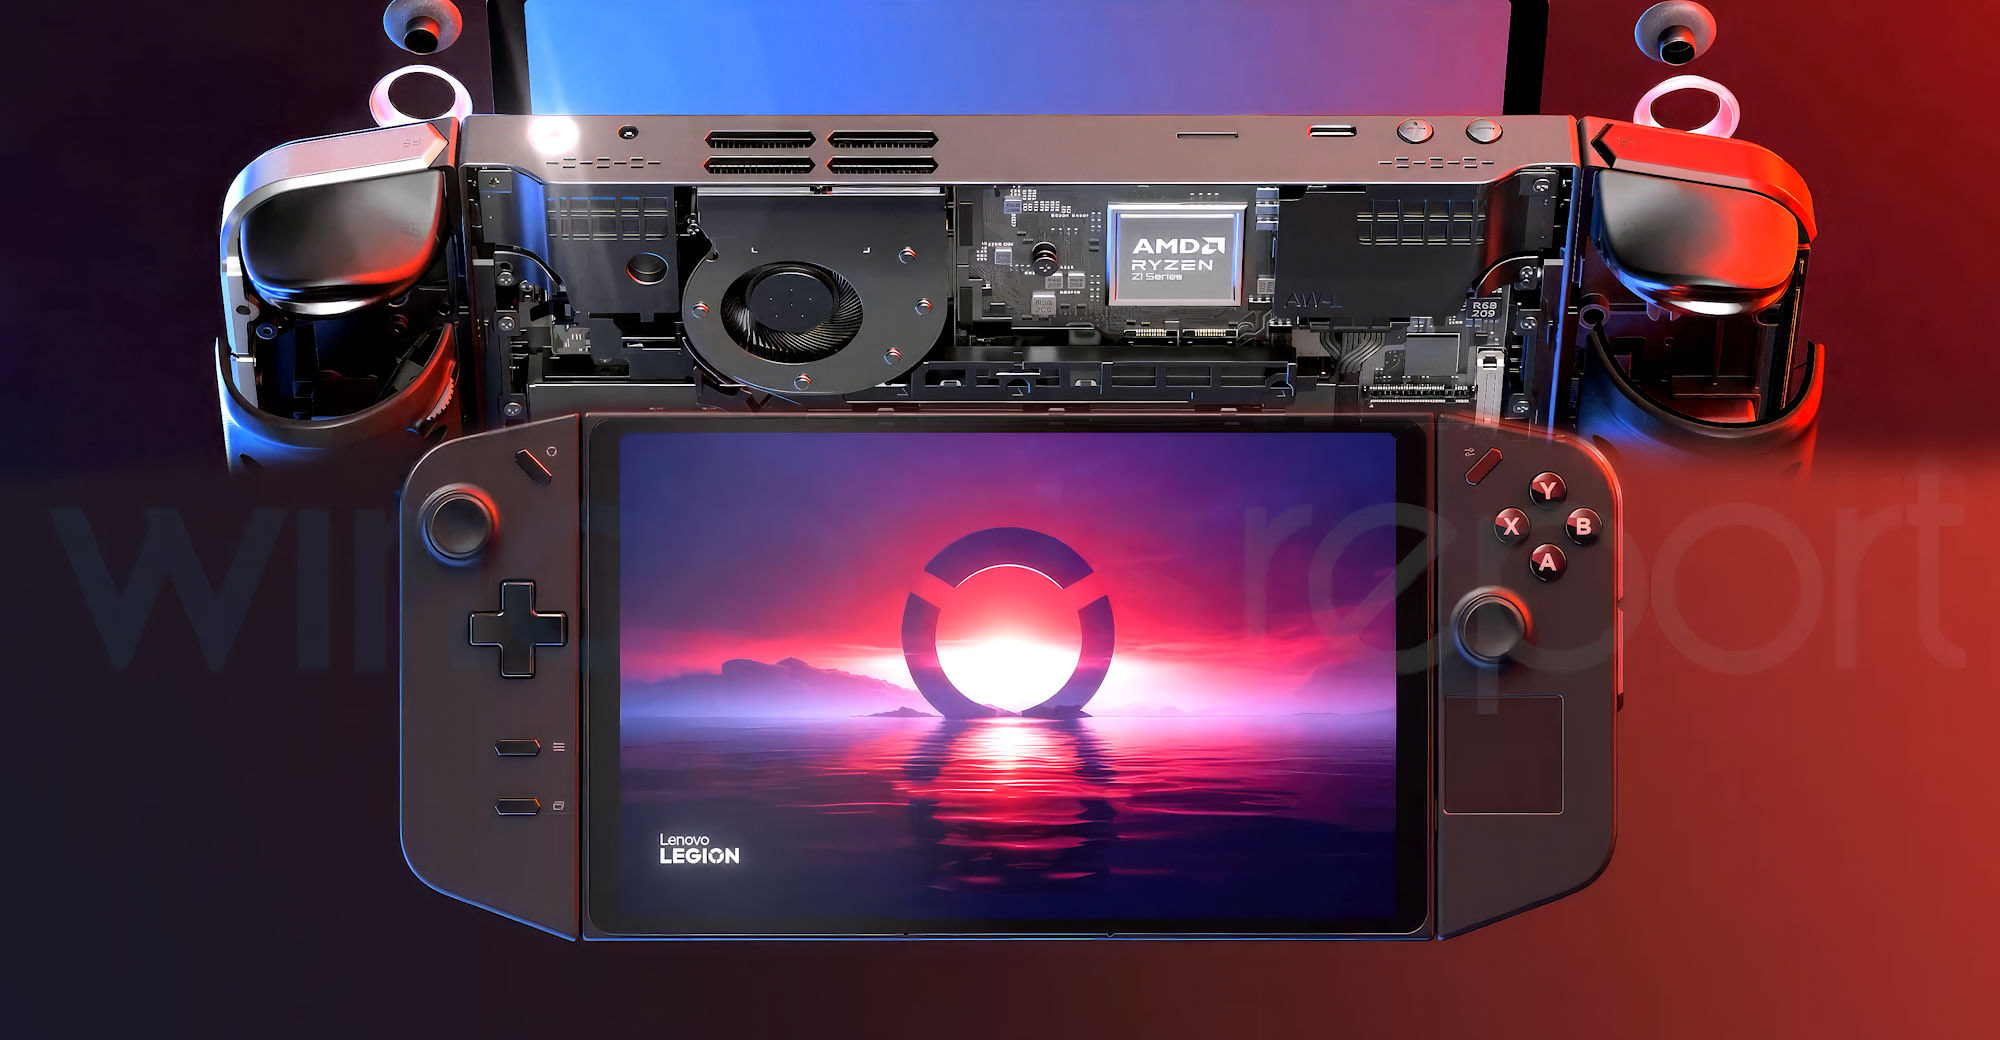 Lenovo Legion Go, AMD Phoenix powered handheld with 'joy-cons' has